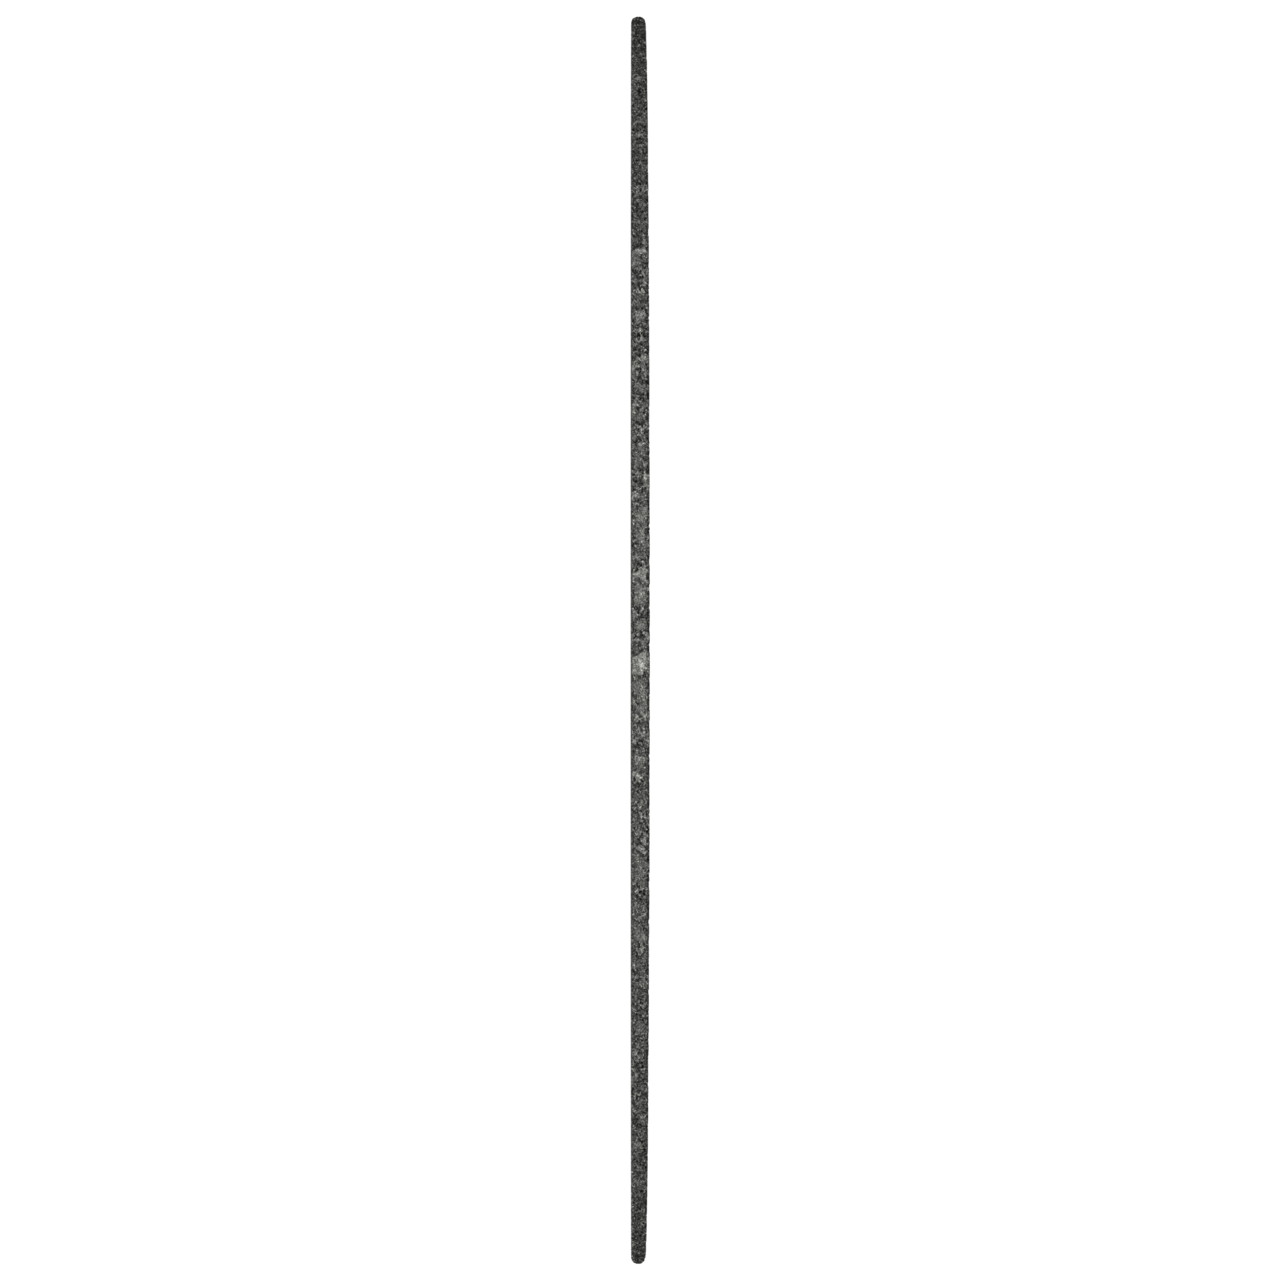 Dischi da taglio Tyrolit DxDxH 50x2x6 Per acciaio inox, forma: 41 - versione diritta, Art. 323970